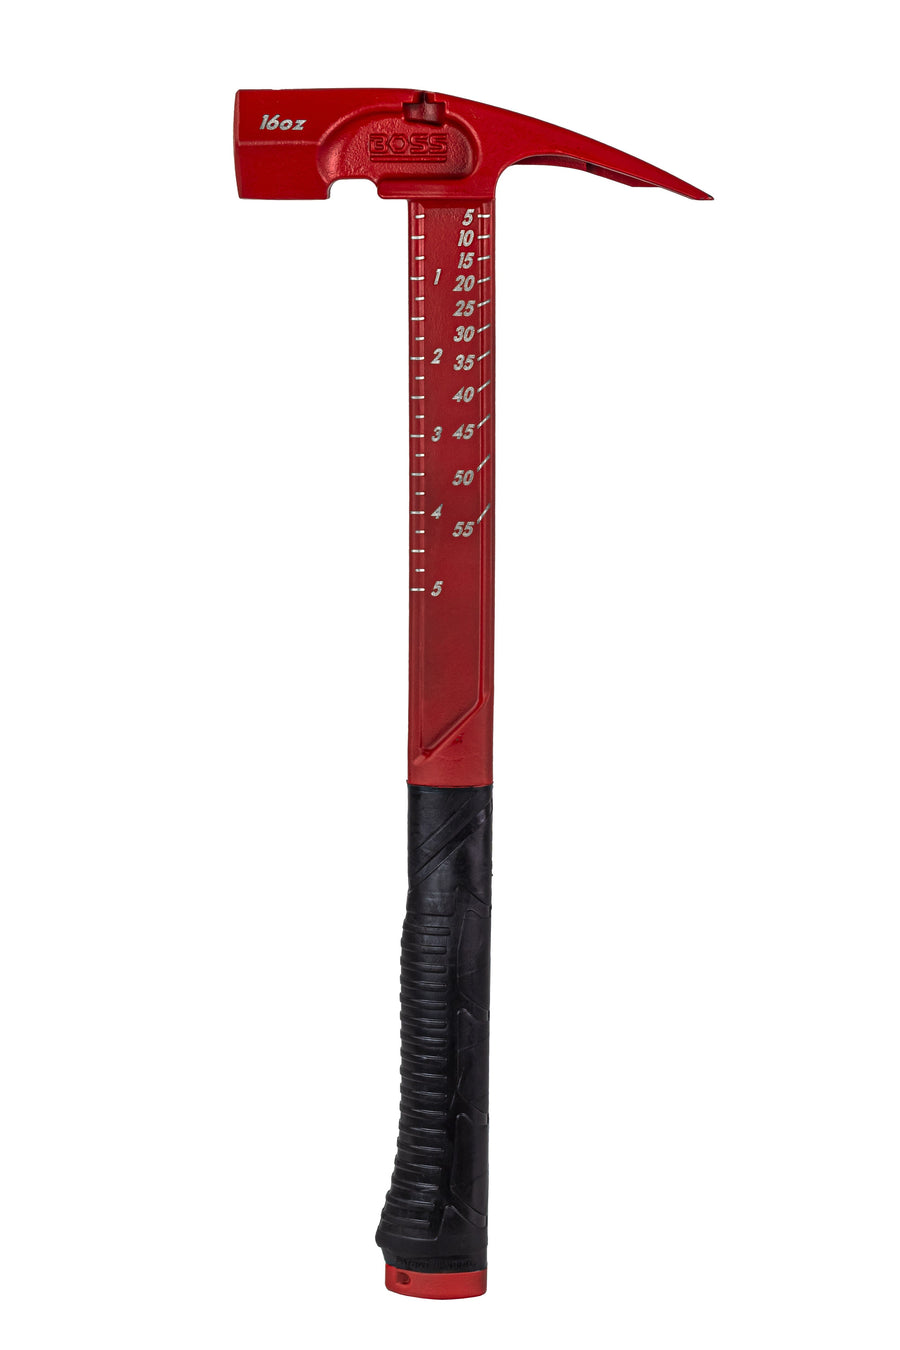 Pro Series Cerakote® Titanium Hammer Titanium Boss Hammer Co. 16 oz Smooth RED